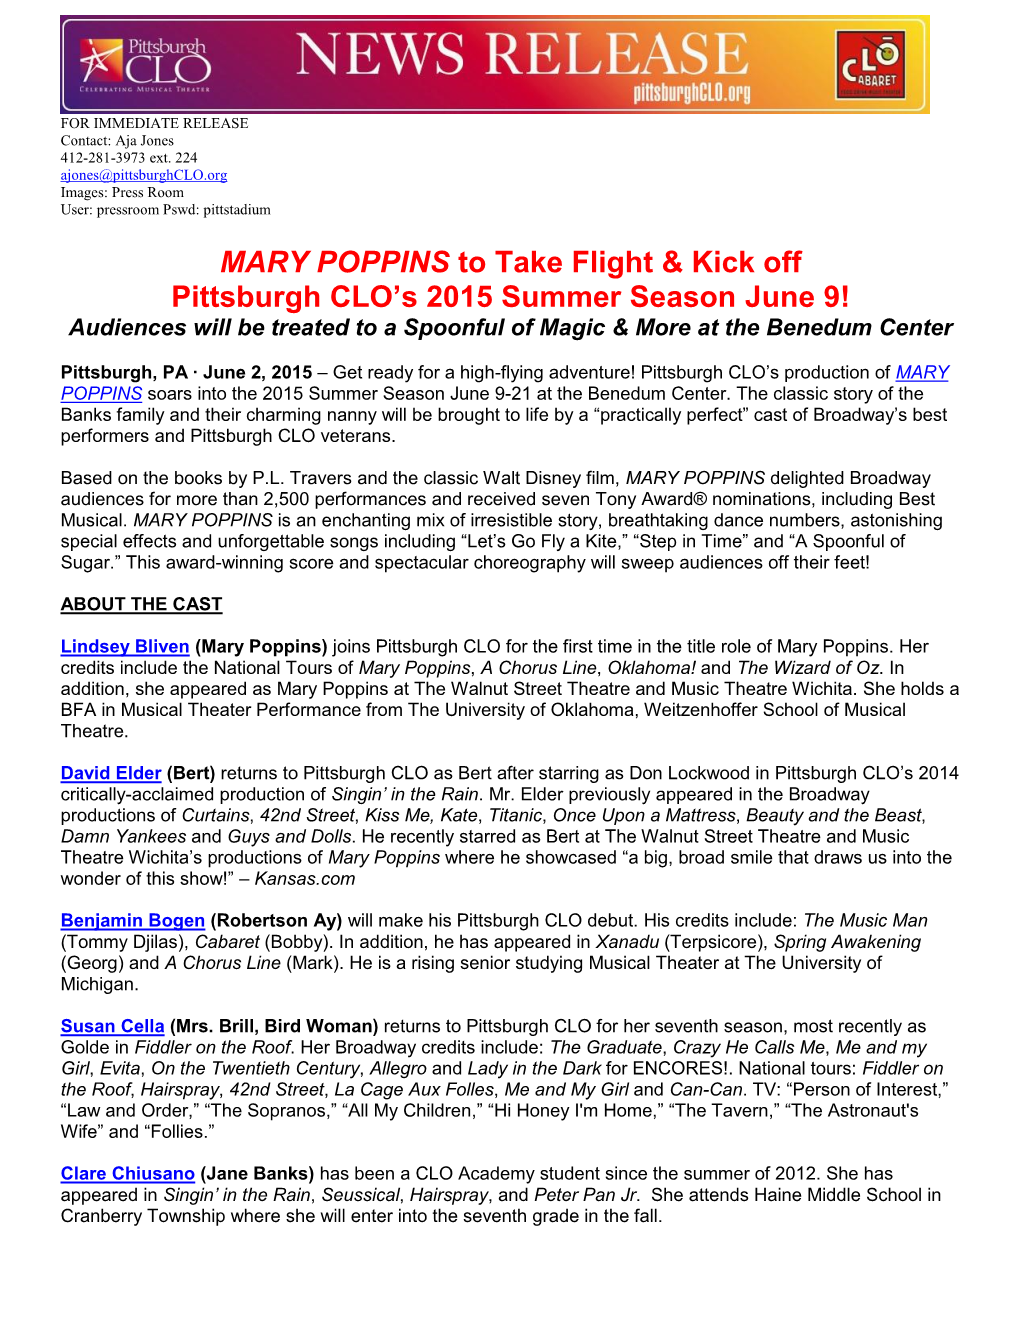 MARY POPPINS to Take Flight & Kick Off Pittsburgh CLO's 2015 Summer Season June 9!